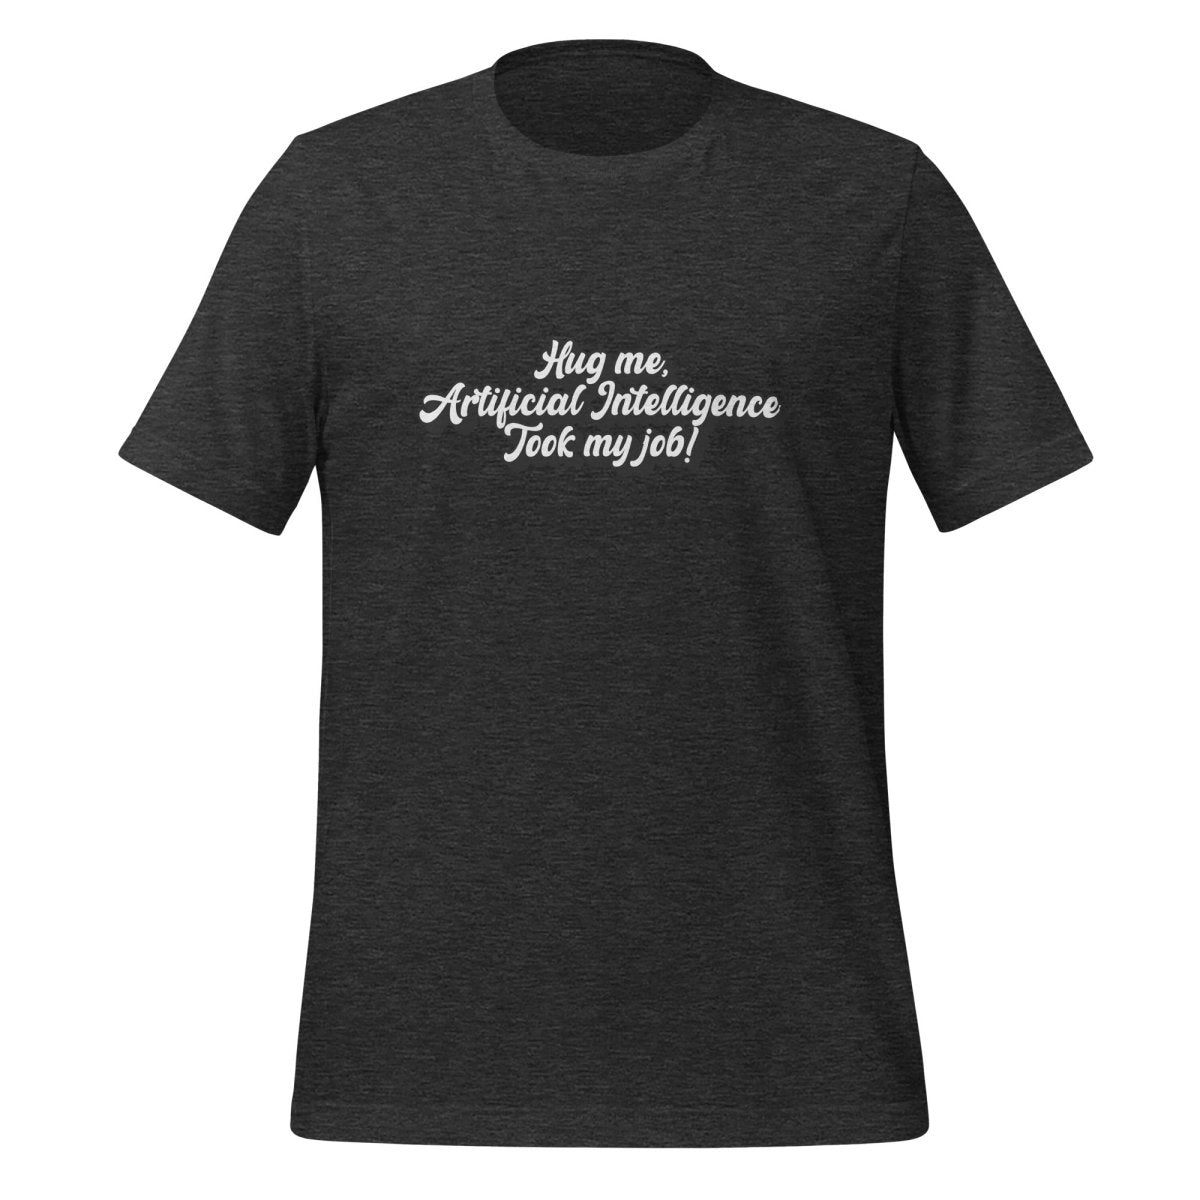 Hug me, AI took my job! Vintage T - Shirt (unisex) - Dark Grey Heather - AI Store